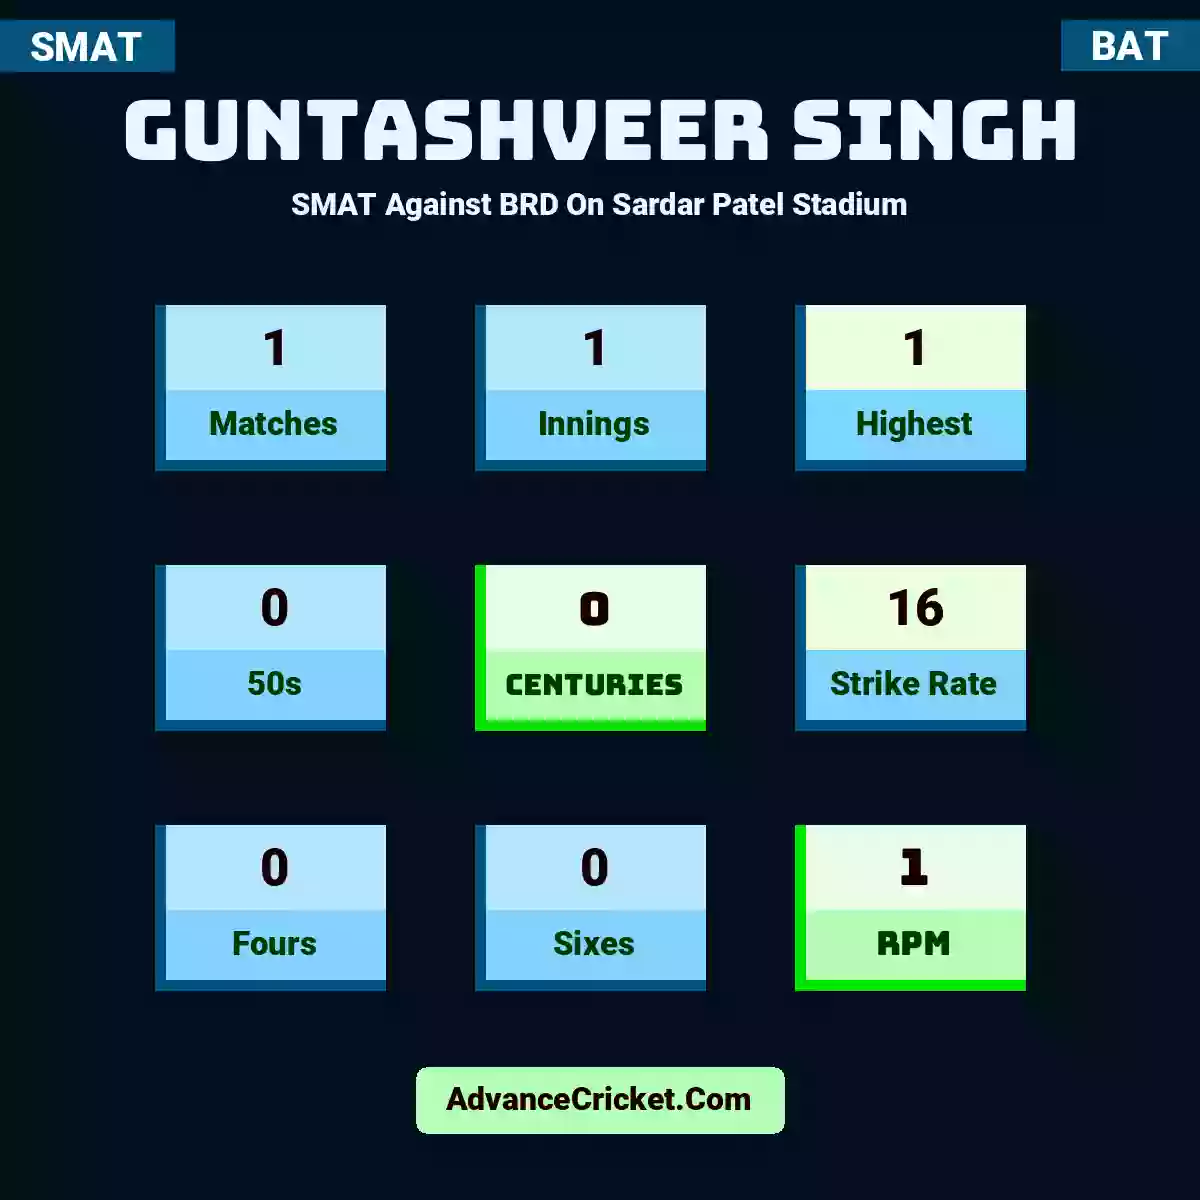 Guntashveer Singh SMAT  Against BRD On Sardar Patel Stadium, Guntashveer Singh played 1 matches, scored 1 runs as highest, 0 half-centuries, and 0 centuries, with a strike rate of 16. G.Singh hit 0 fours and 0 sixes, with an RPM of 1.